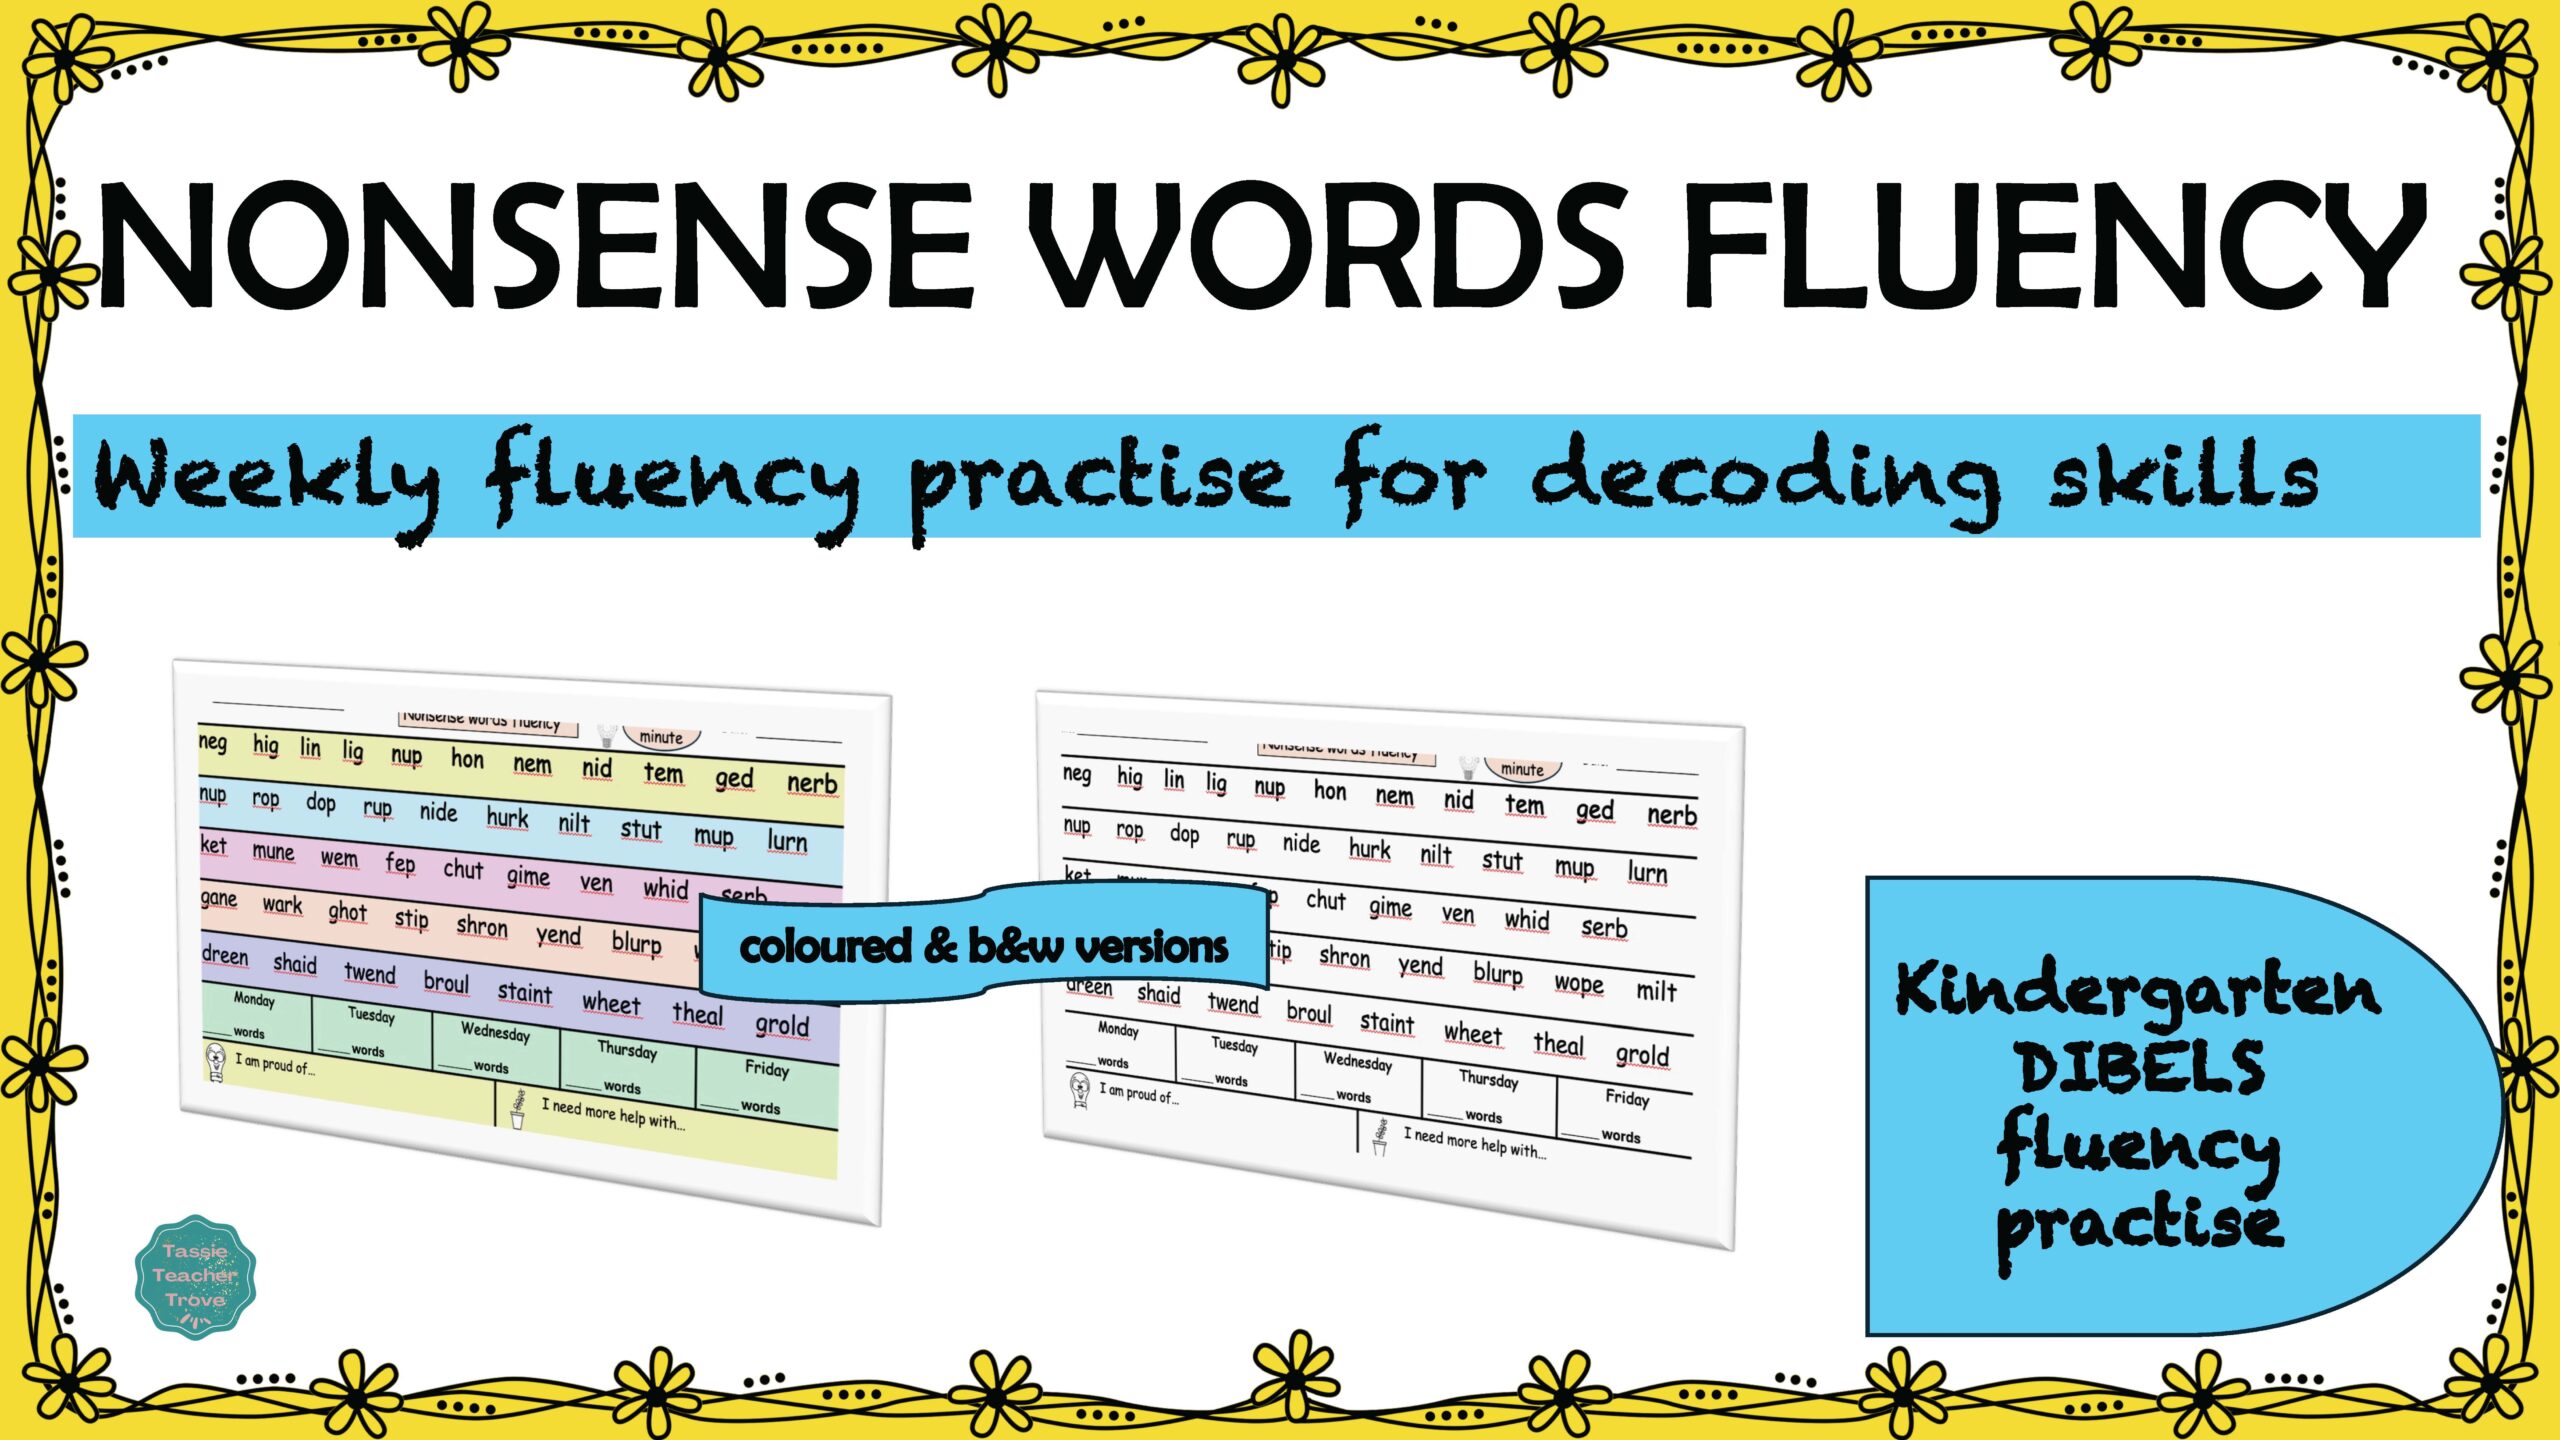 Nonsense Words Fluency Grade K Page 1